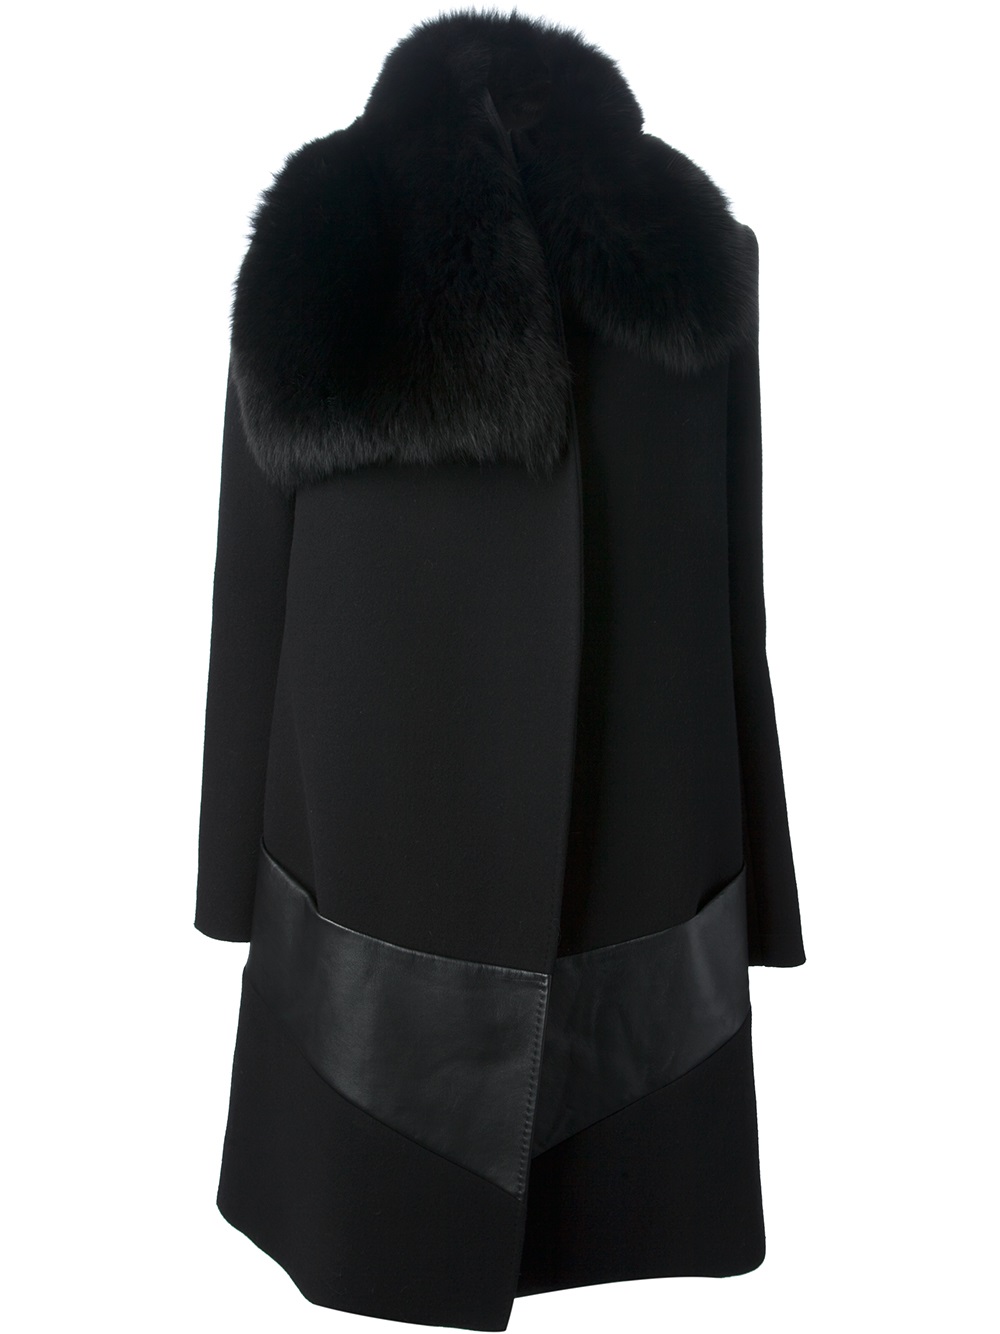 Lyst - Sharon Wauchob Fur Collar Coat in Black